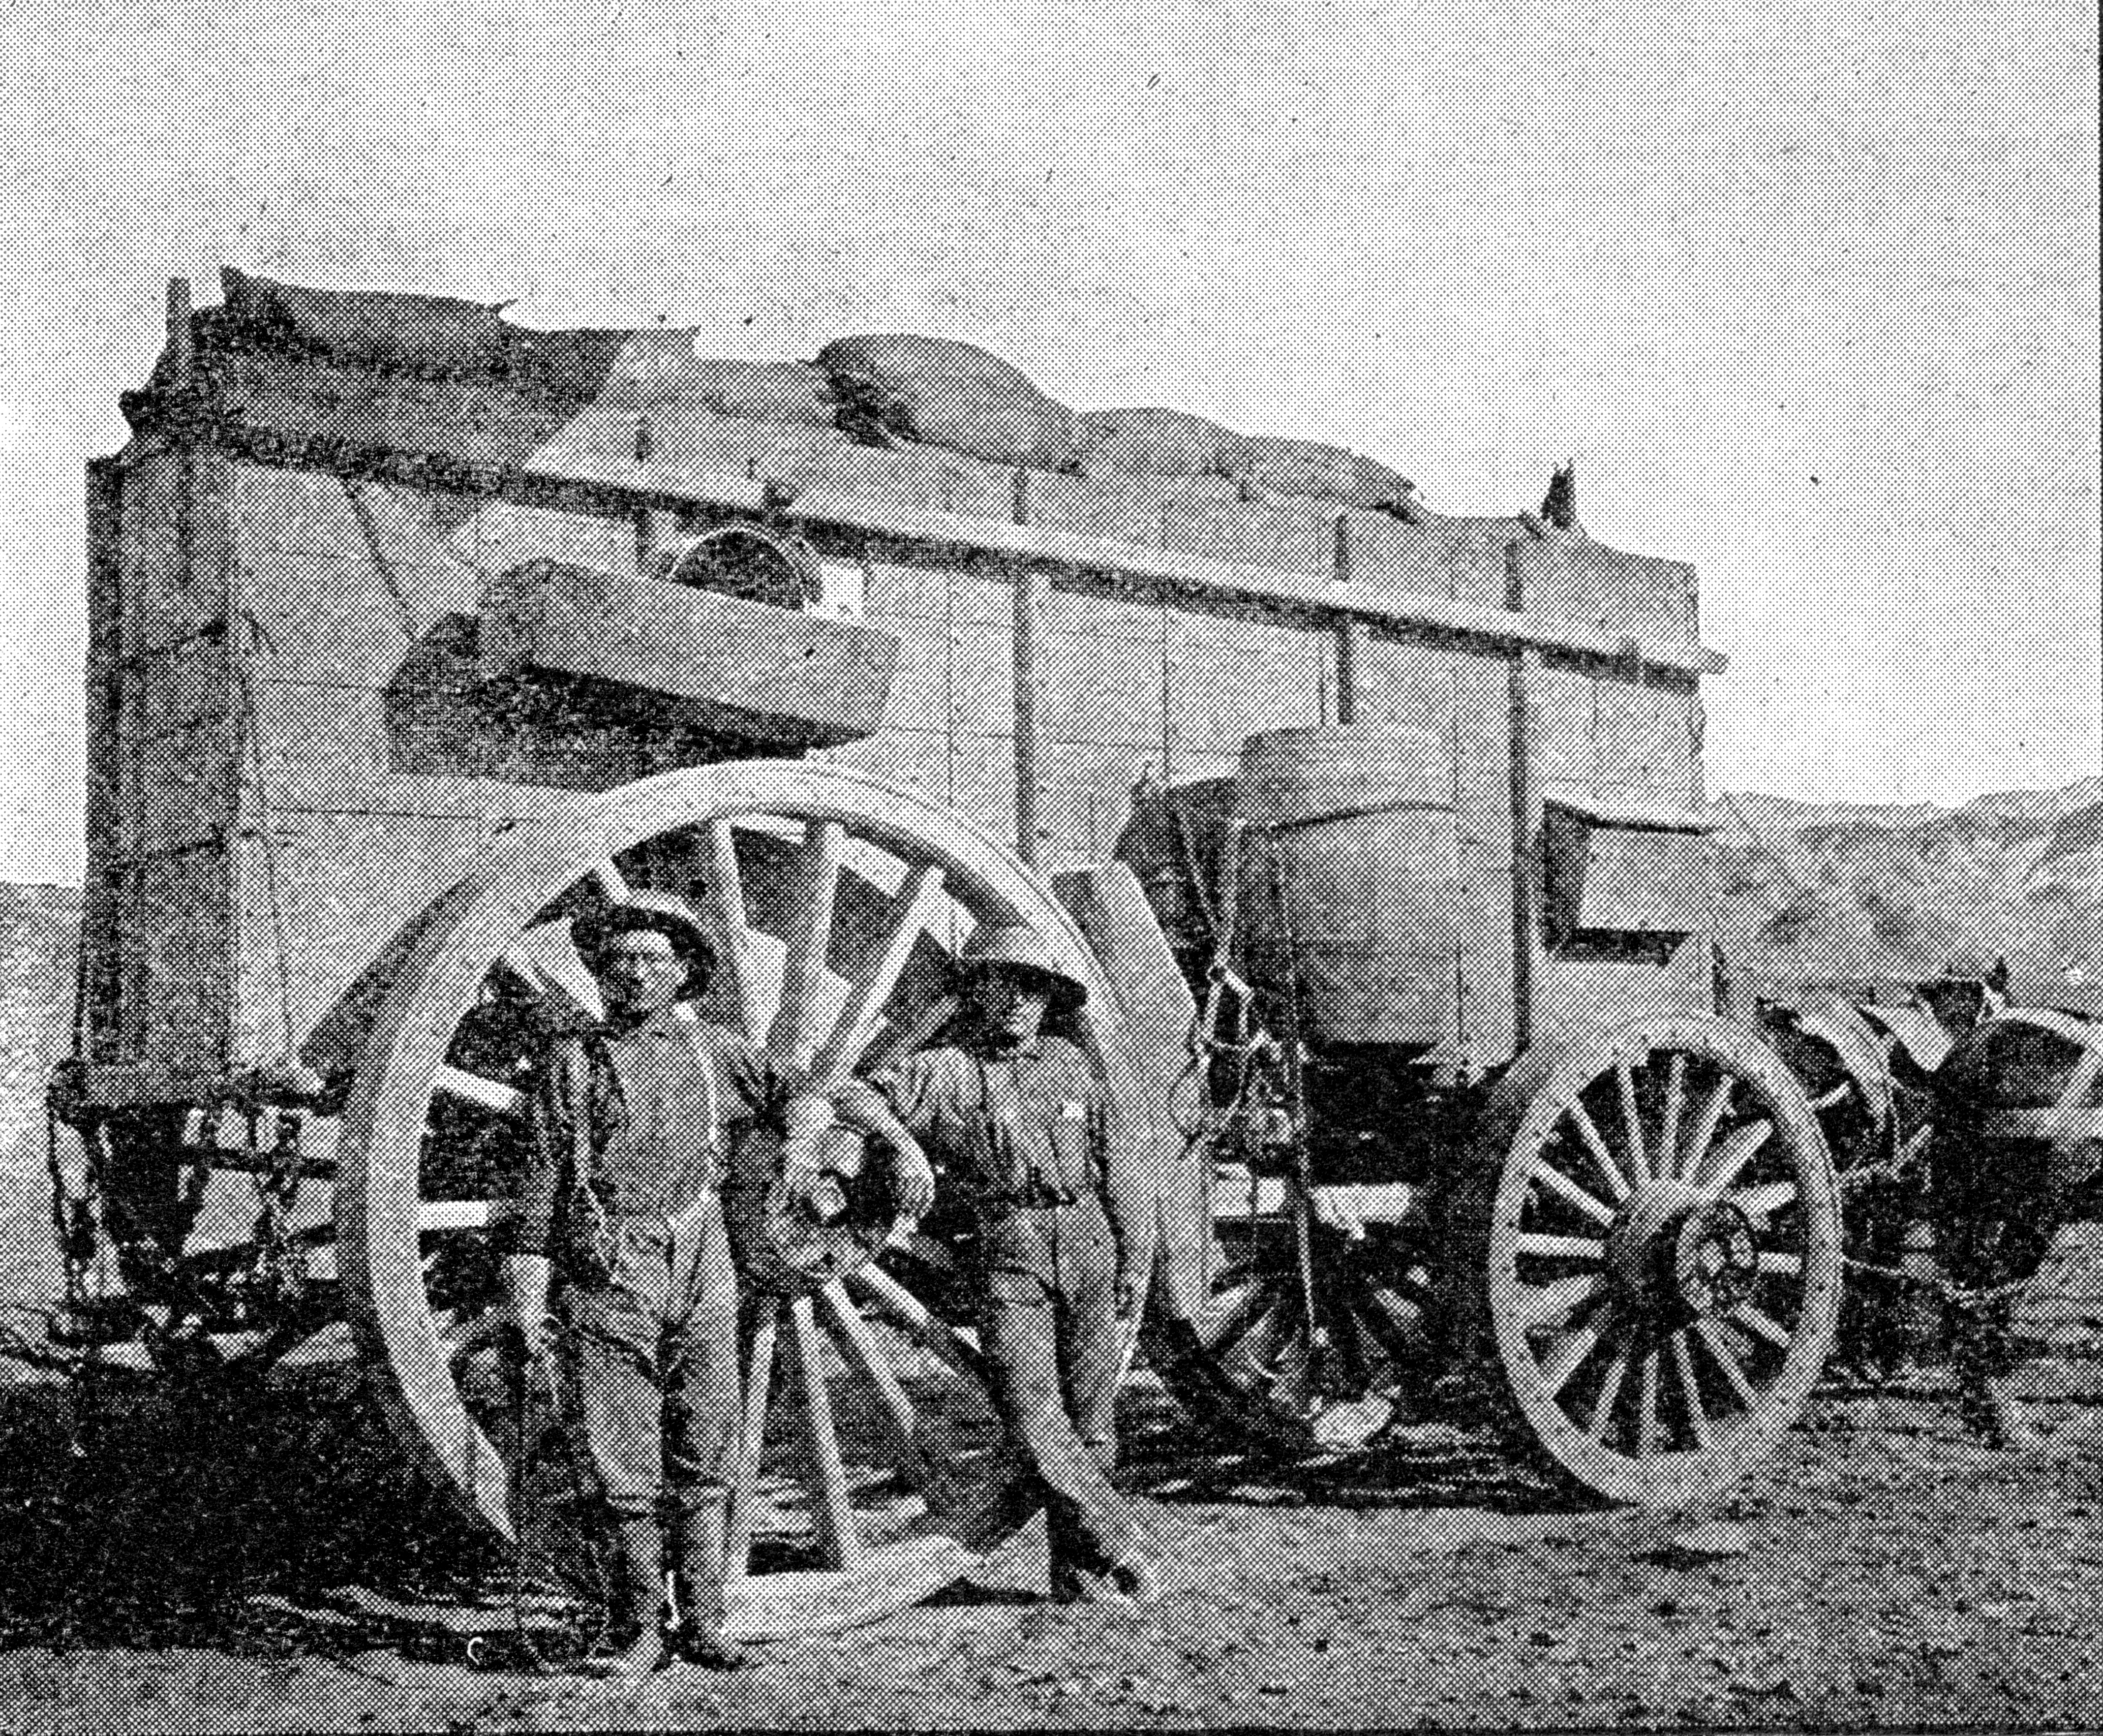 Borax wagons photo